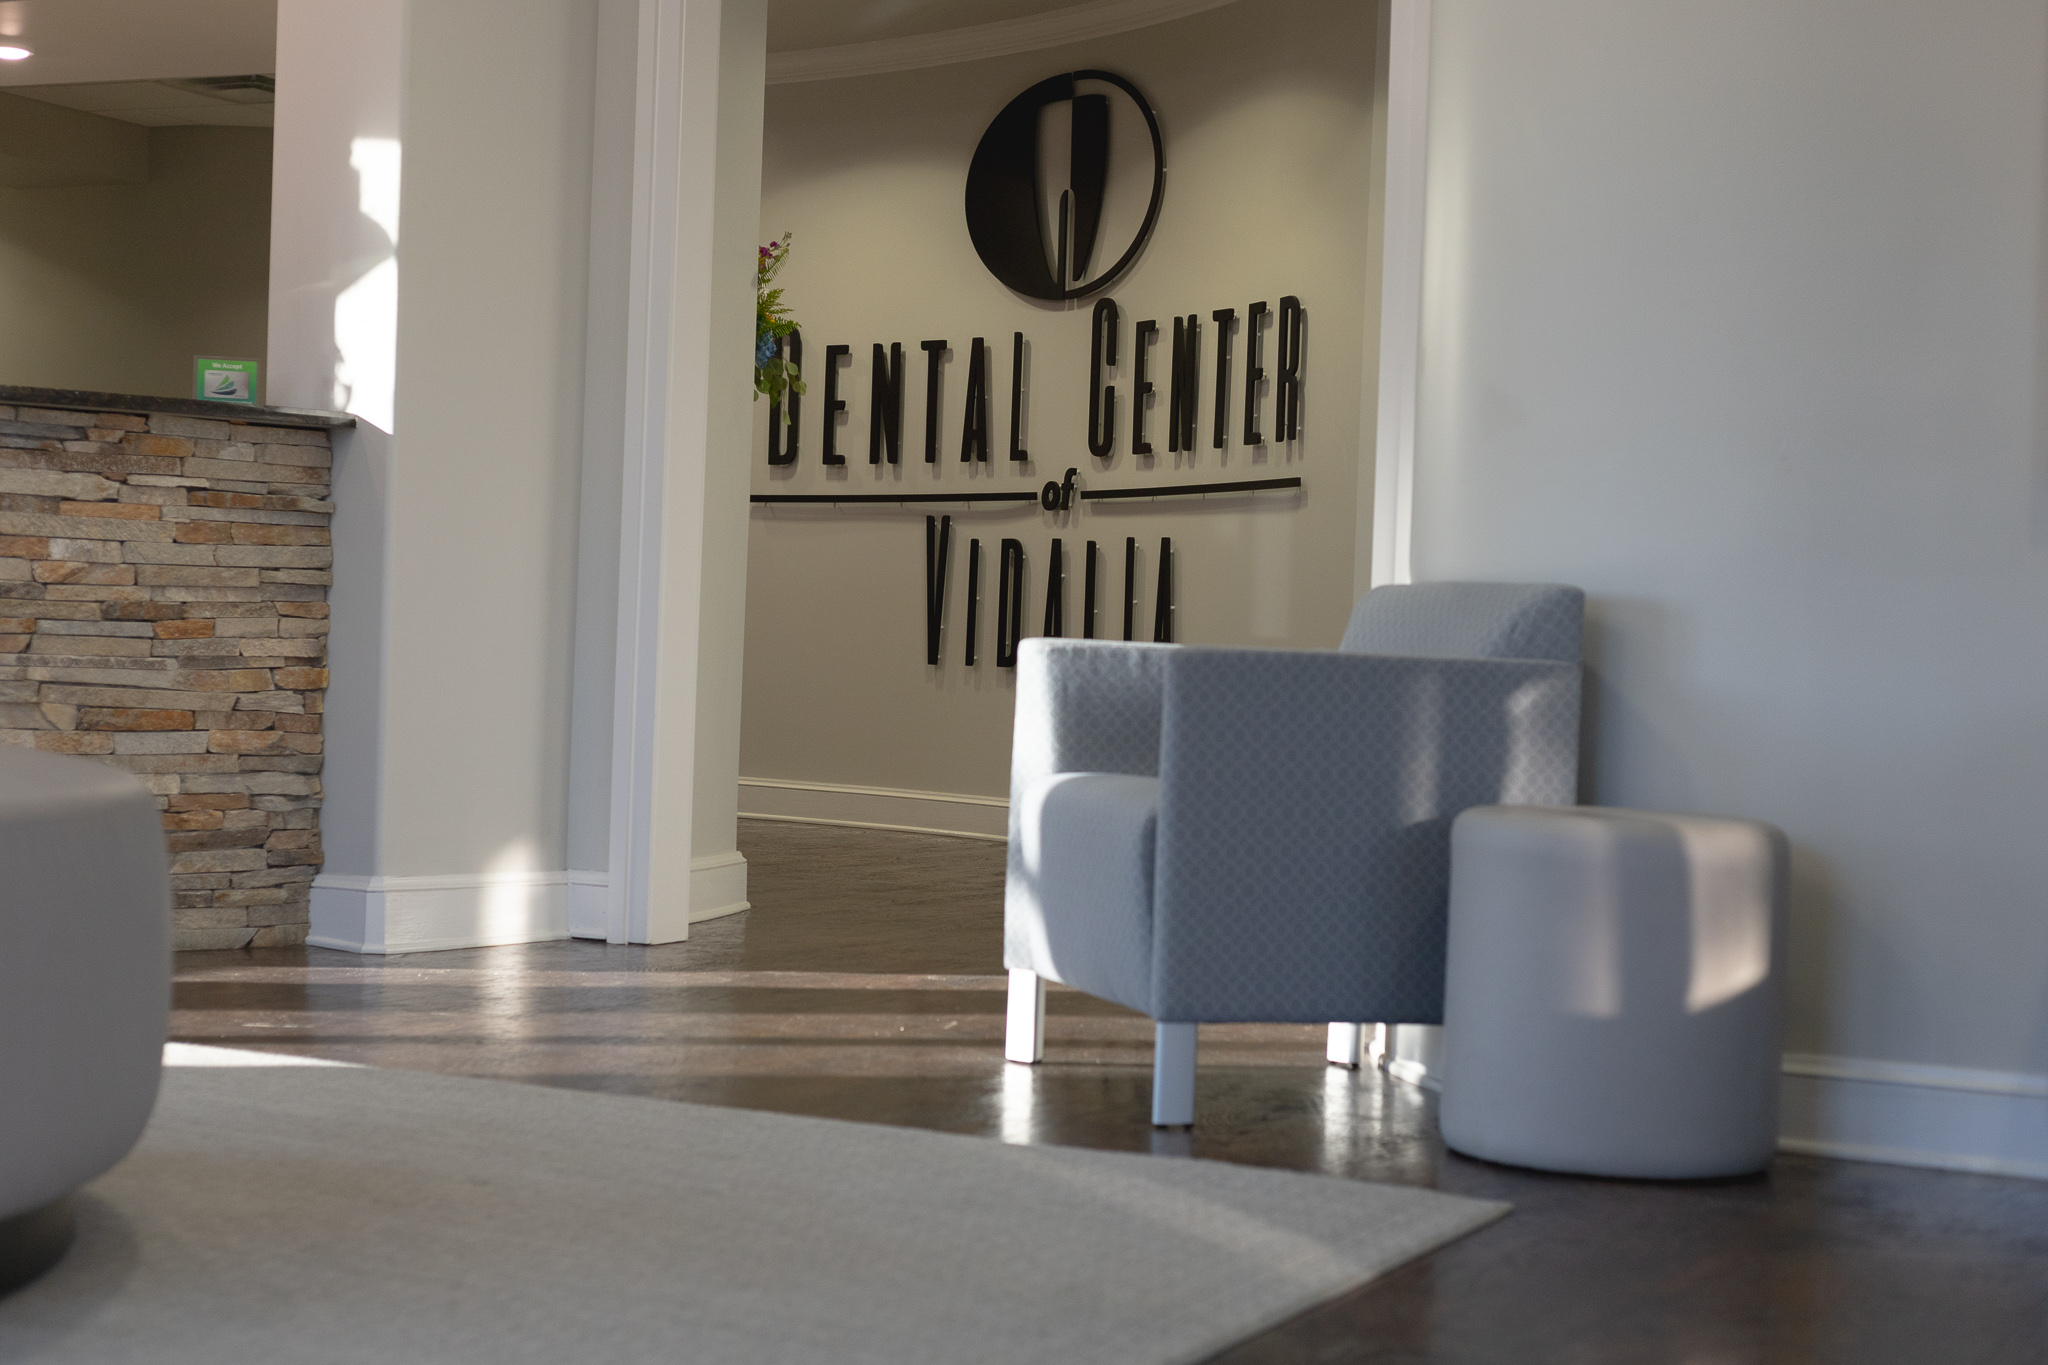 Dentist Office - Vidalia, GA